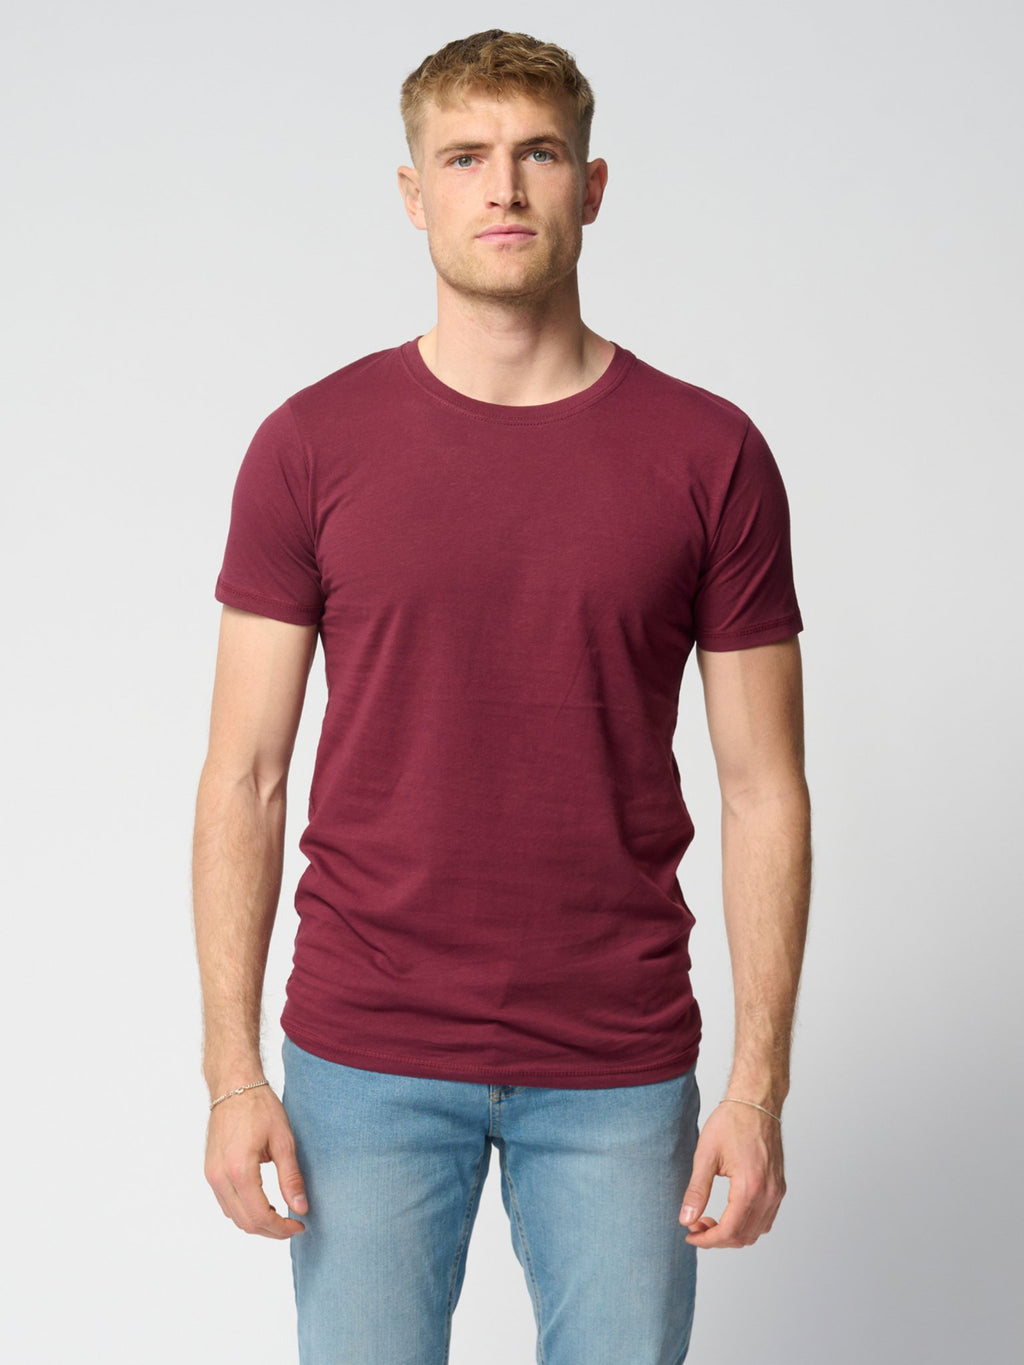 Muscle T -shirt - pakketdeal (3 pcs.)